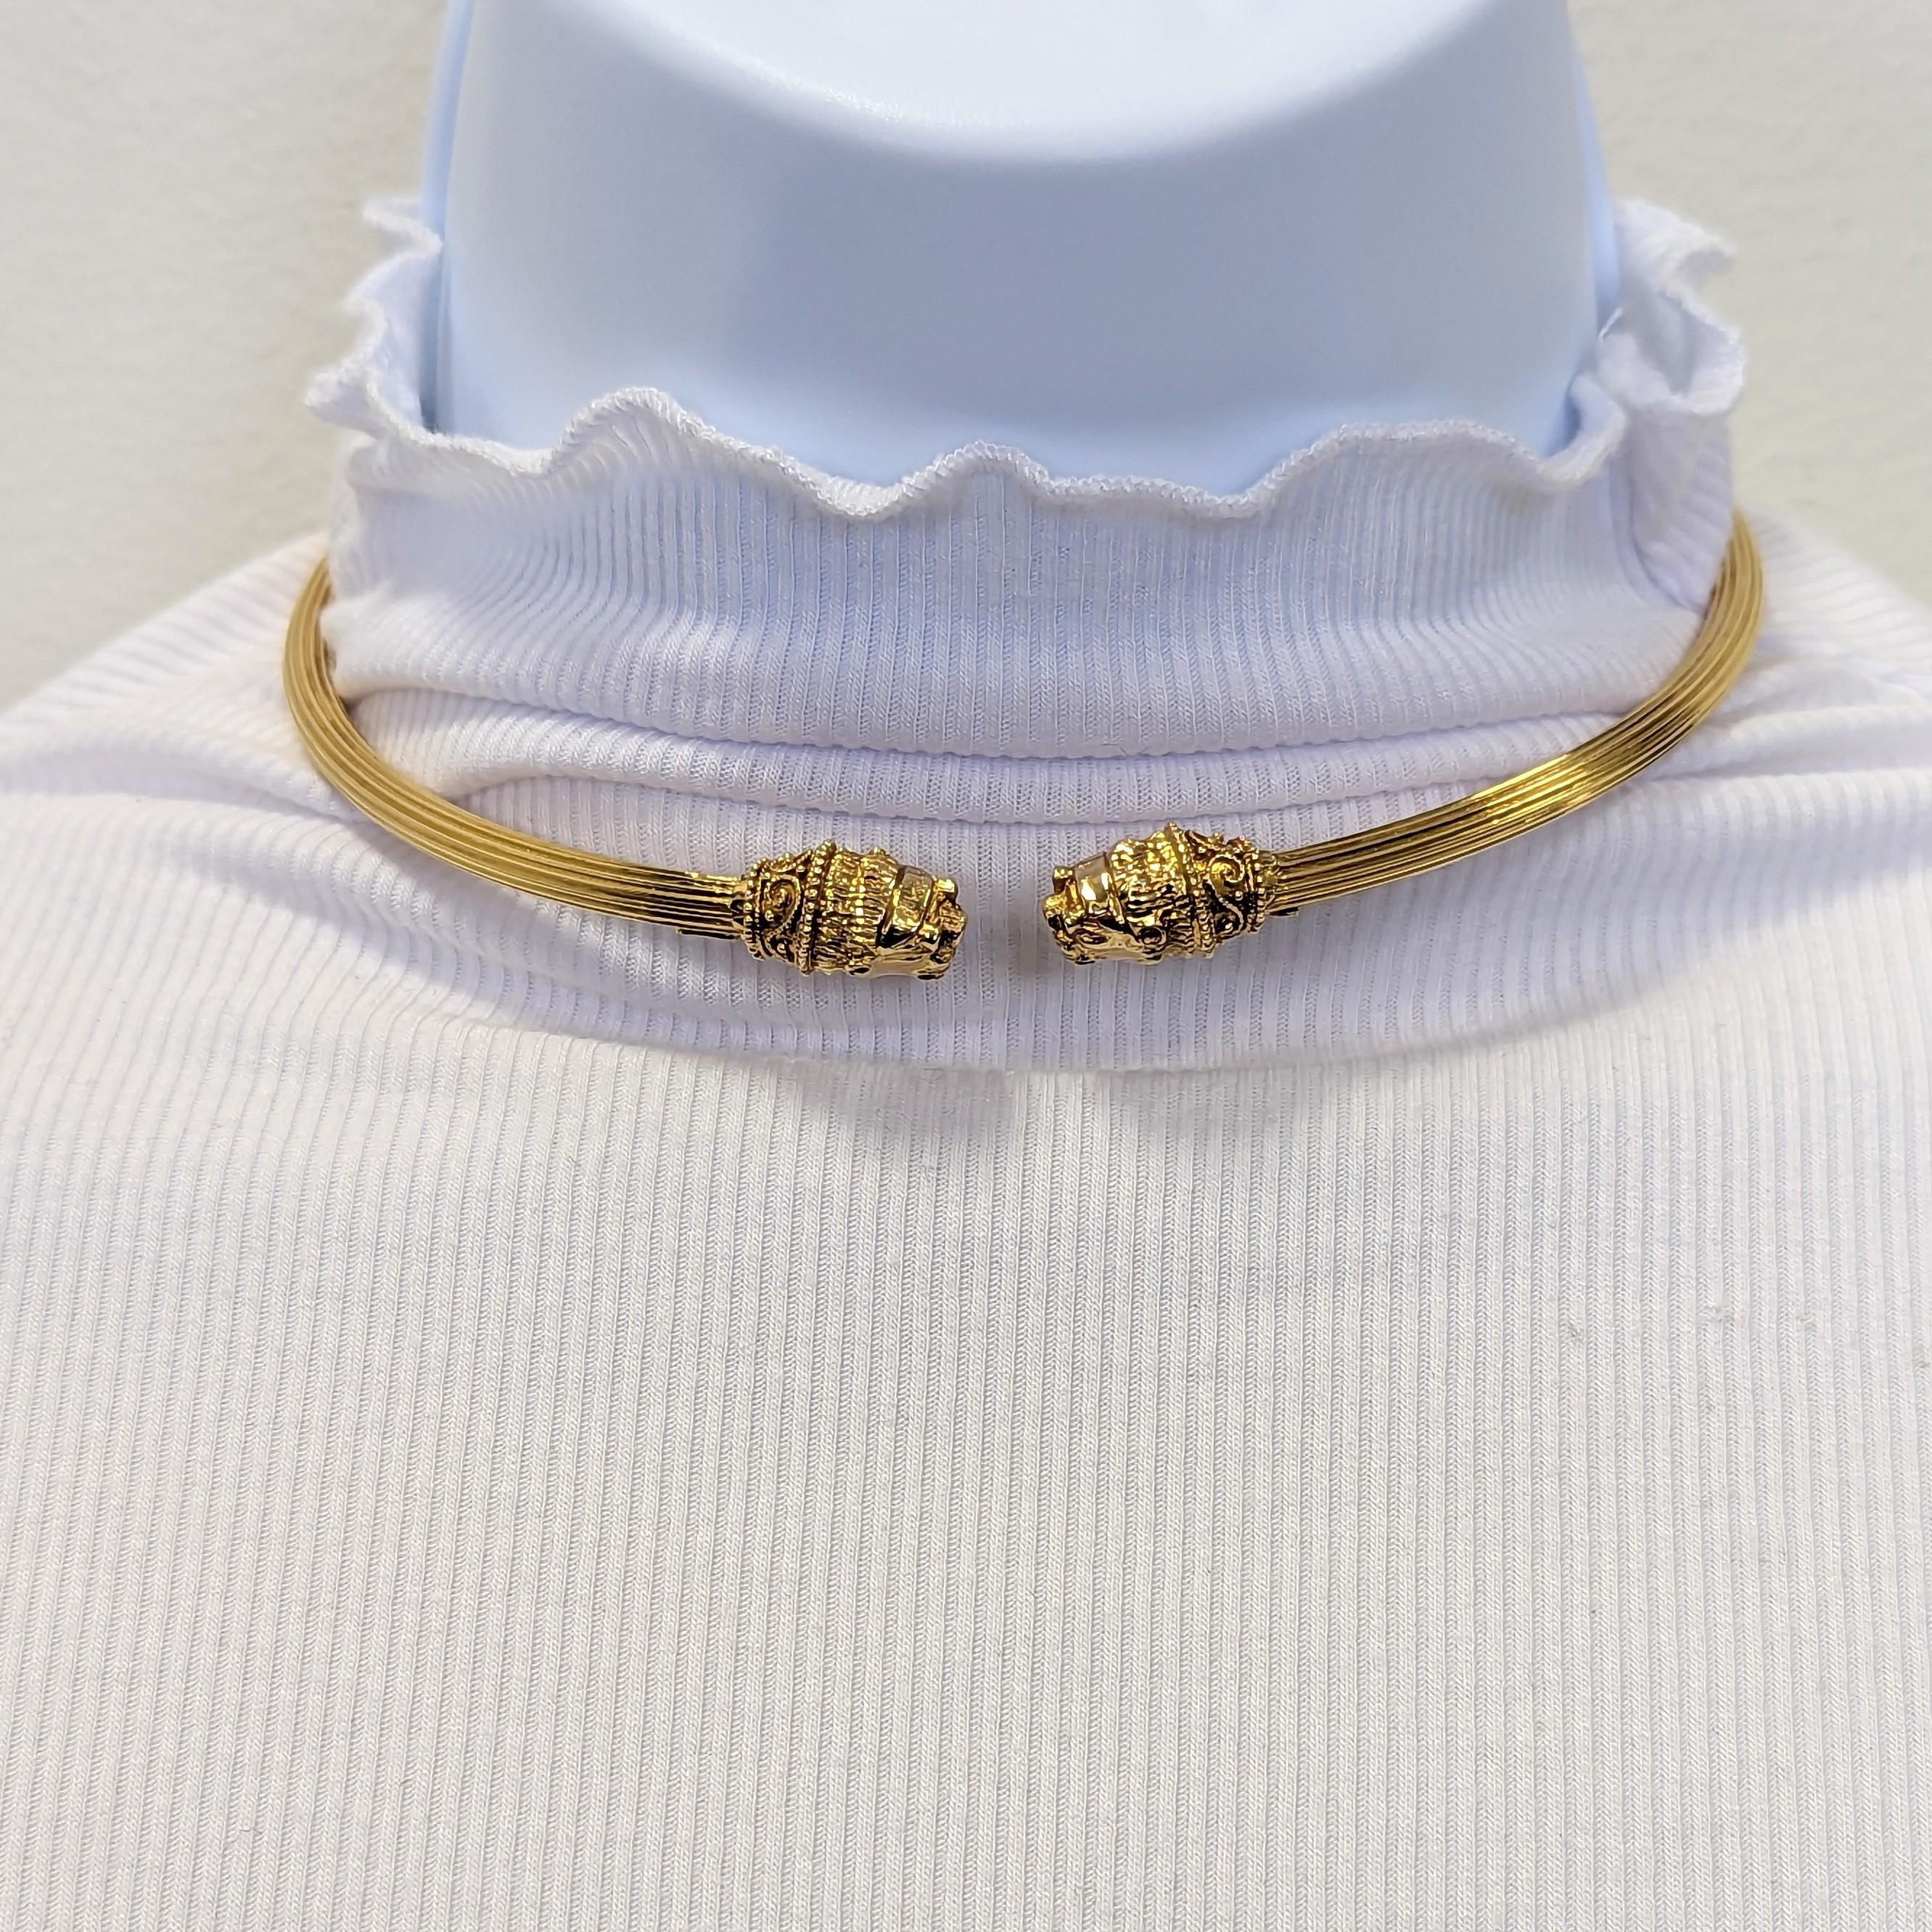 Beautiful estate Lalaounis choker necklace handmade in 18k yellow gold.  